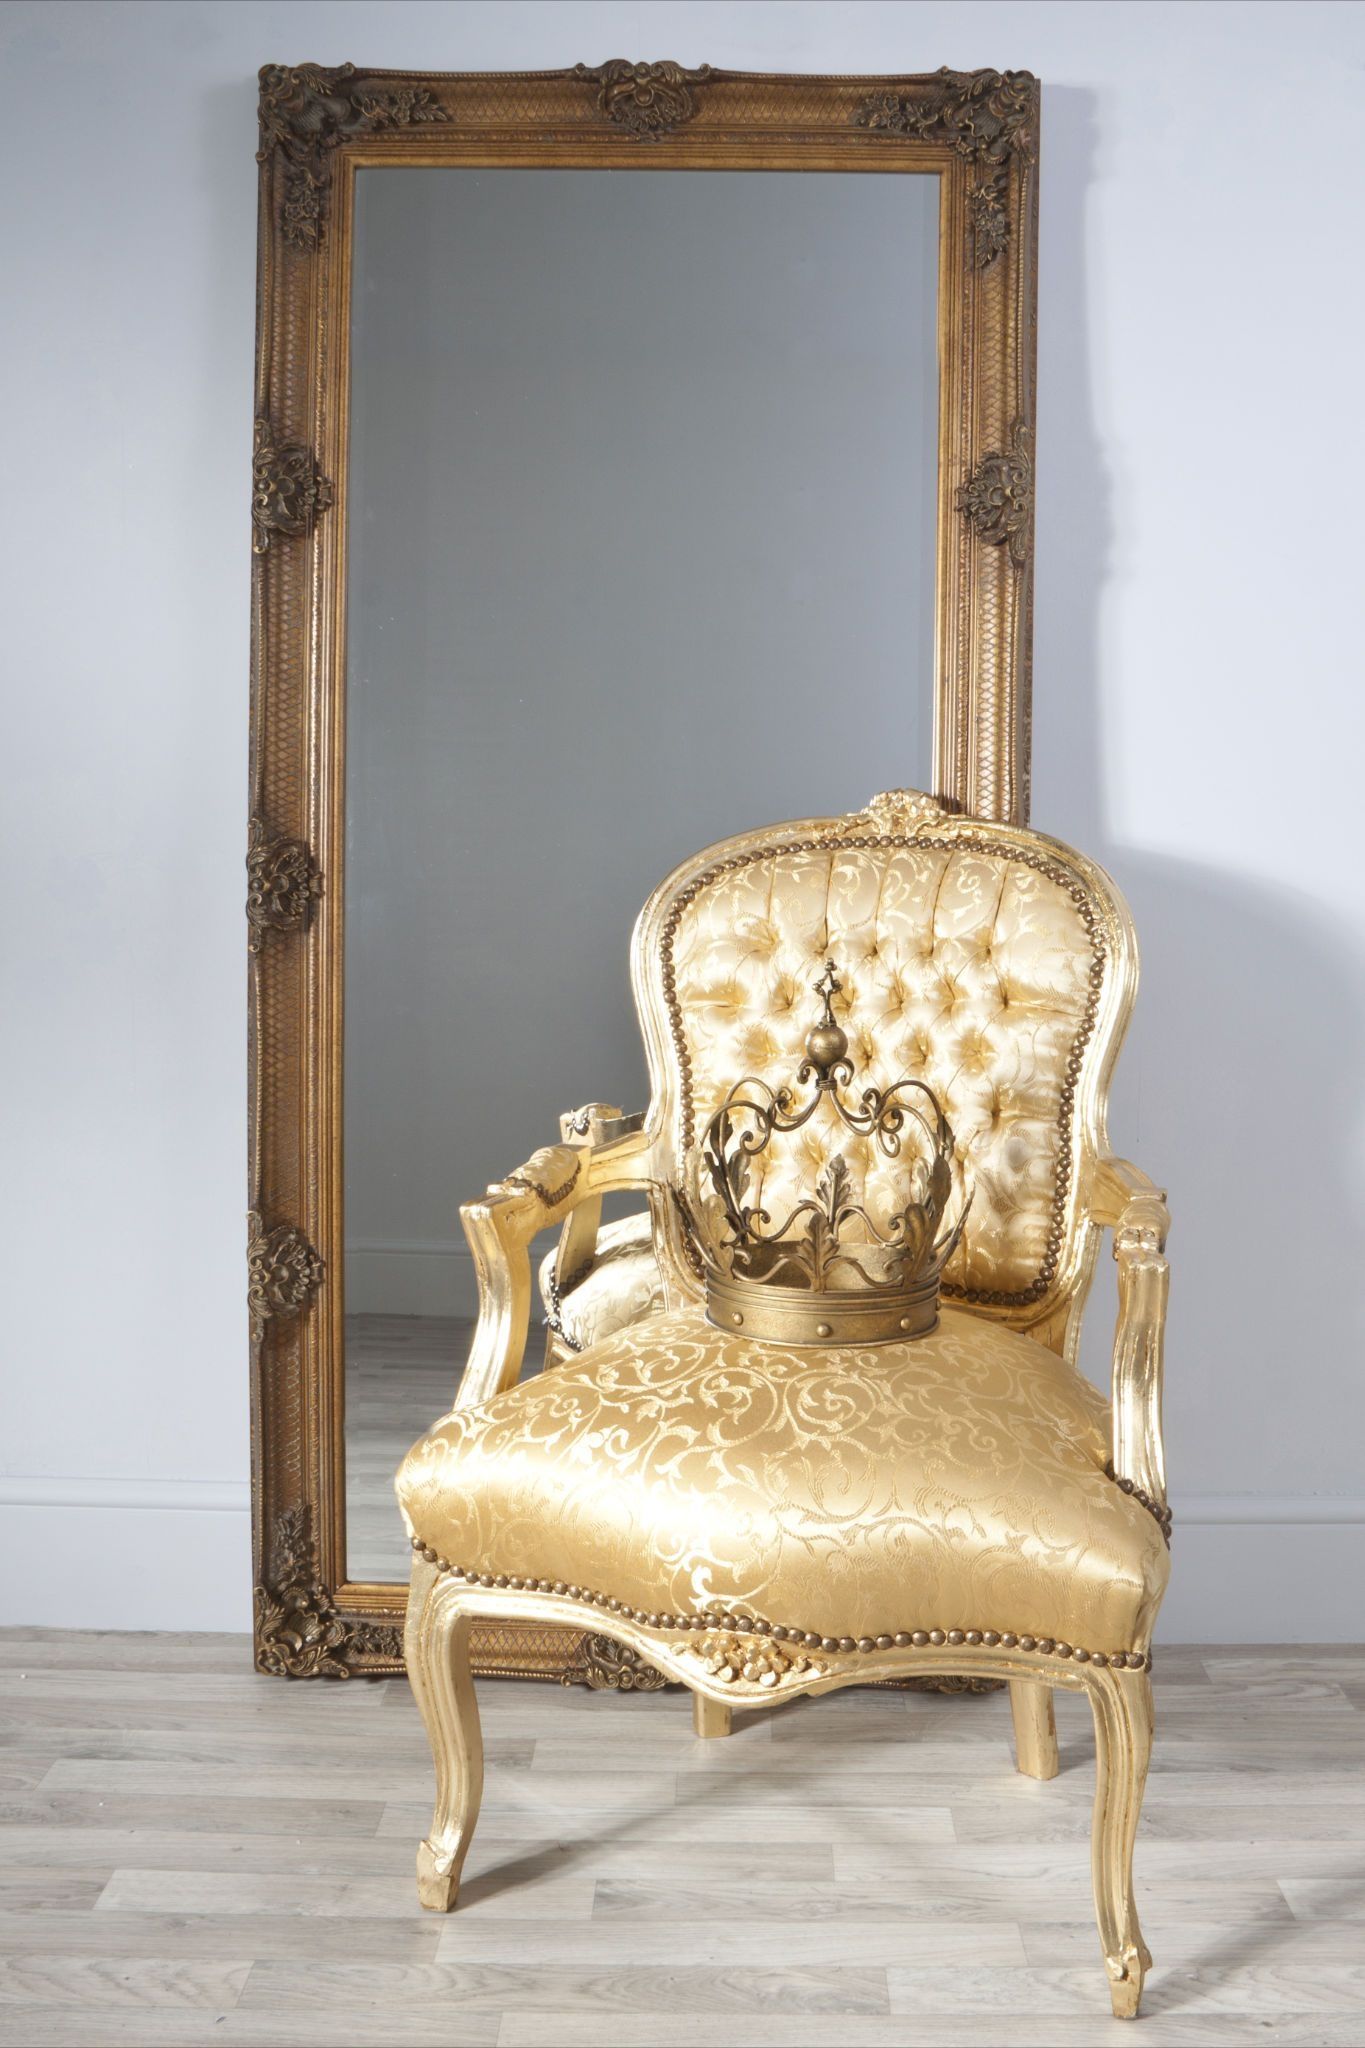 Large Gold Antique Mirror | Mirror Ideas